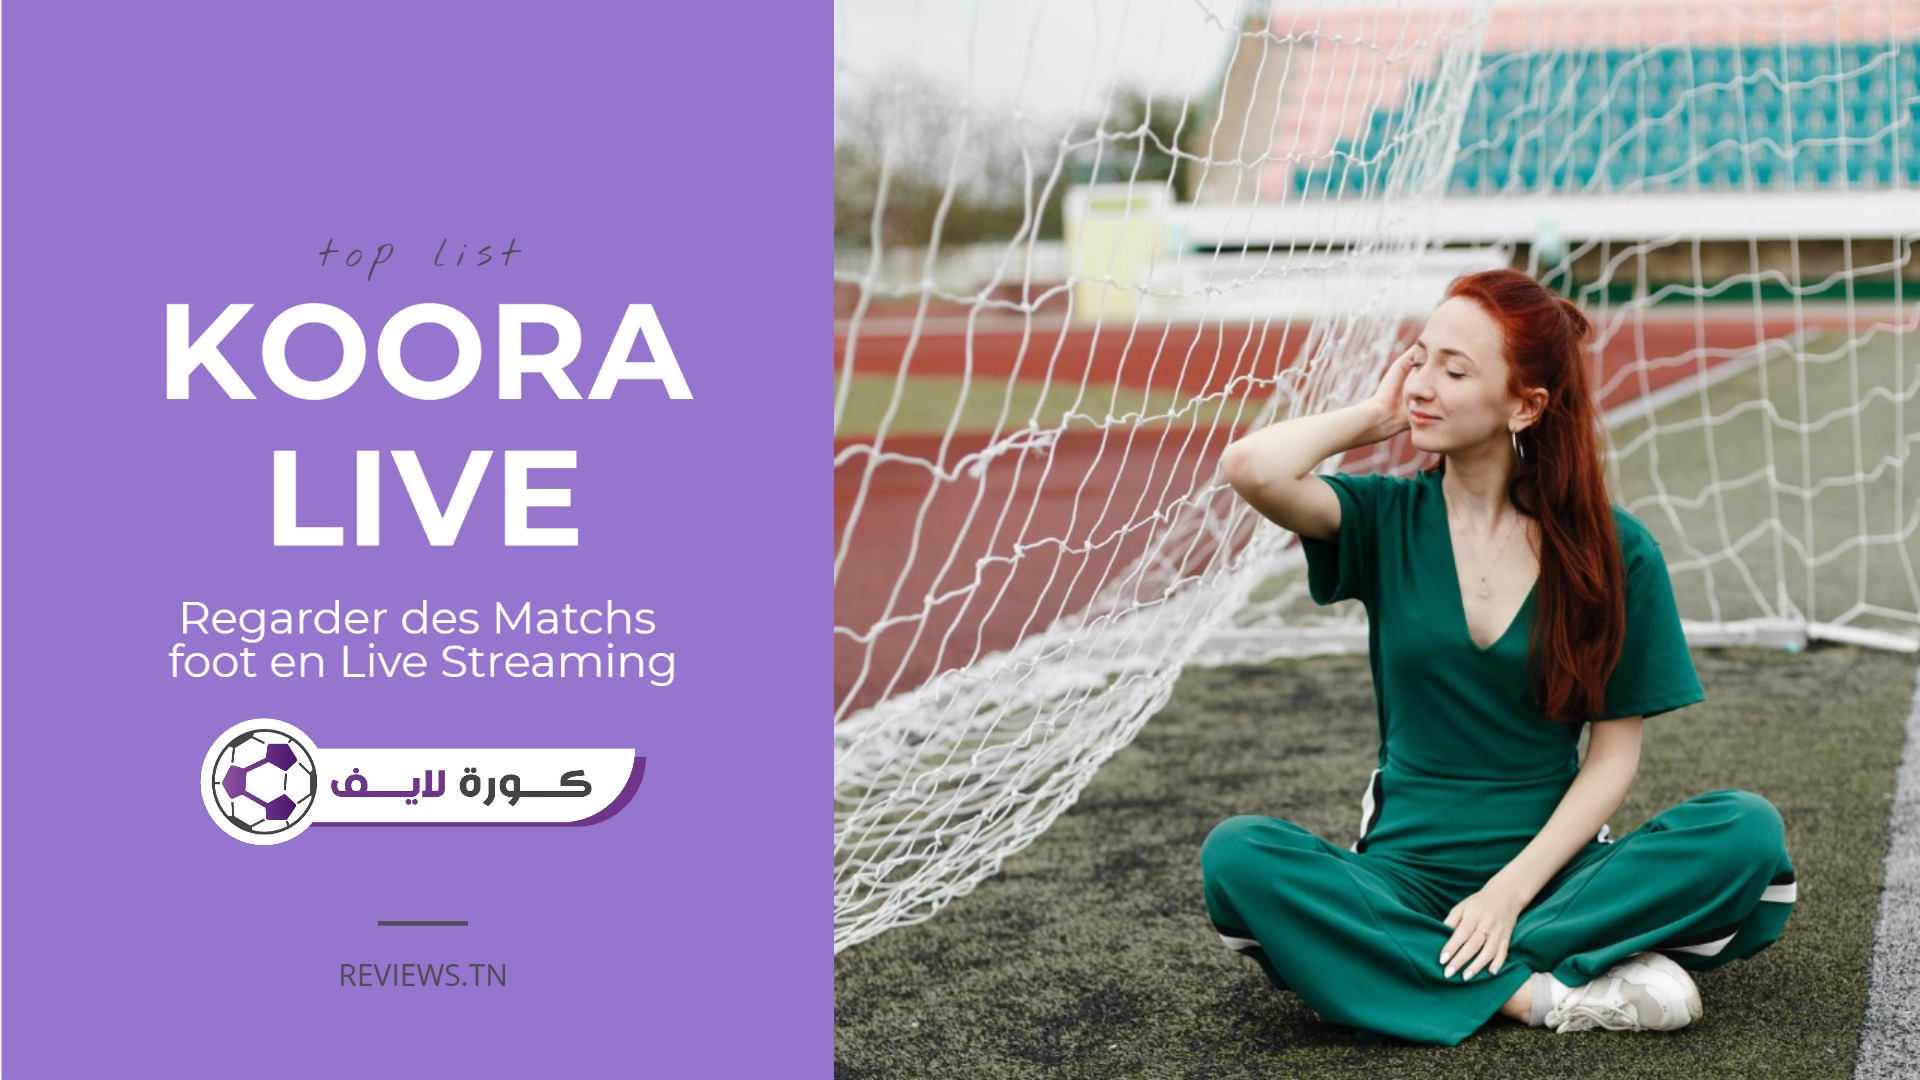 Koora live: 21 ເວັບໄຊທ໌ທີ່ດີທີ່ສຸດເພື່ອເບິ່ງການແຂ່ງຂັນບານເຕະຖ່າຍທອດສົດ